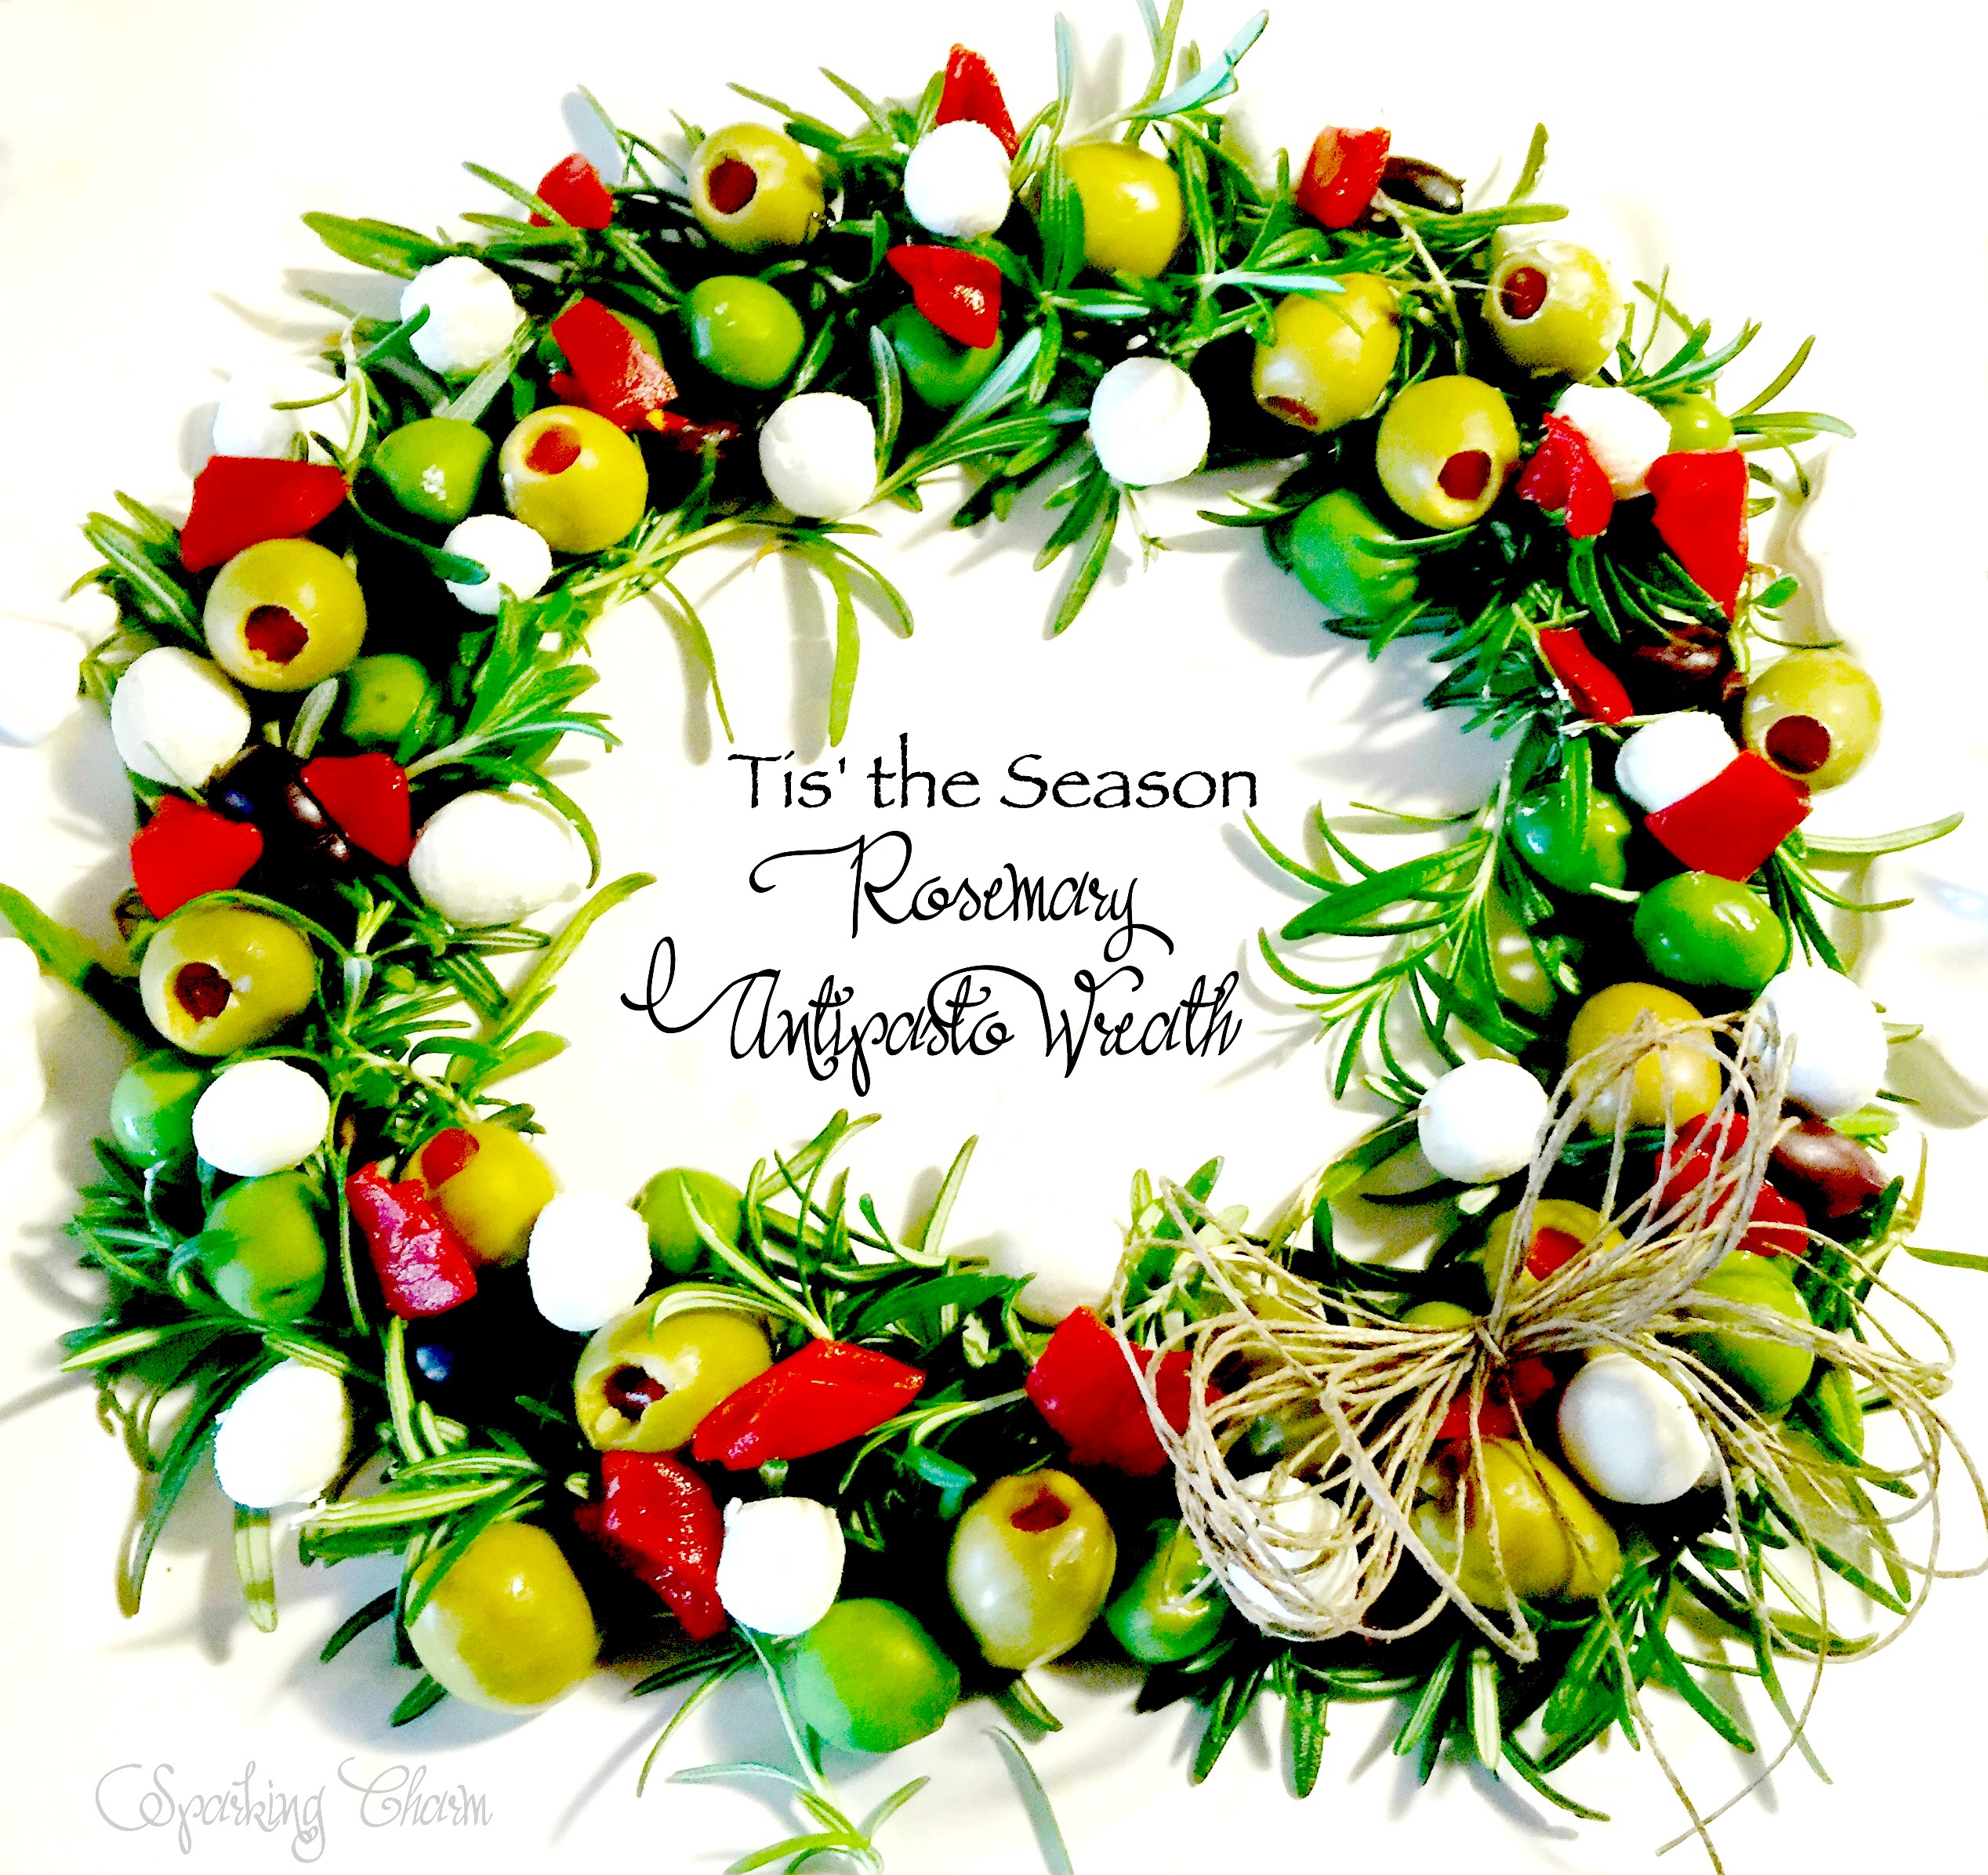 Rosemary Antipasto Wreath